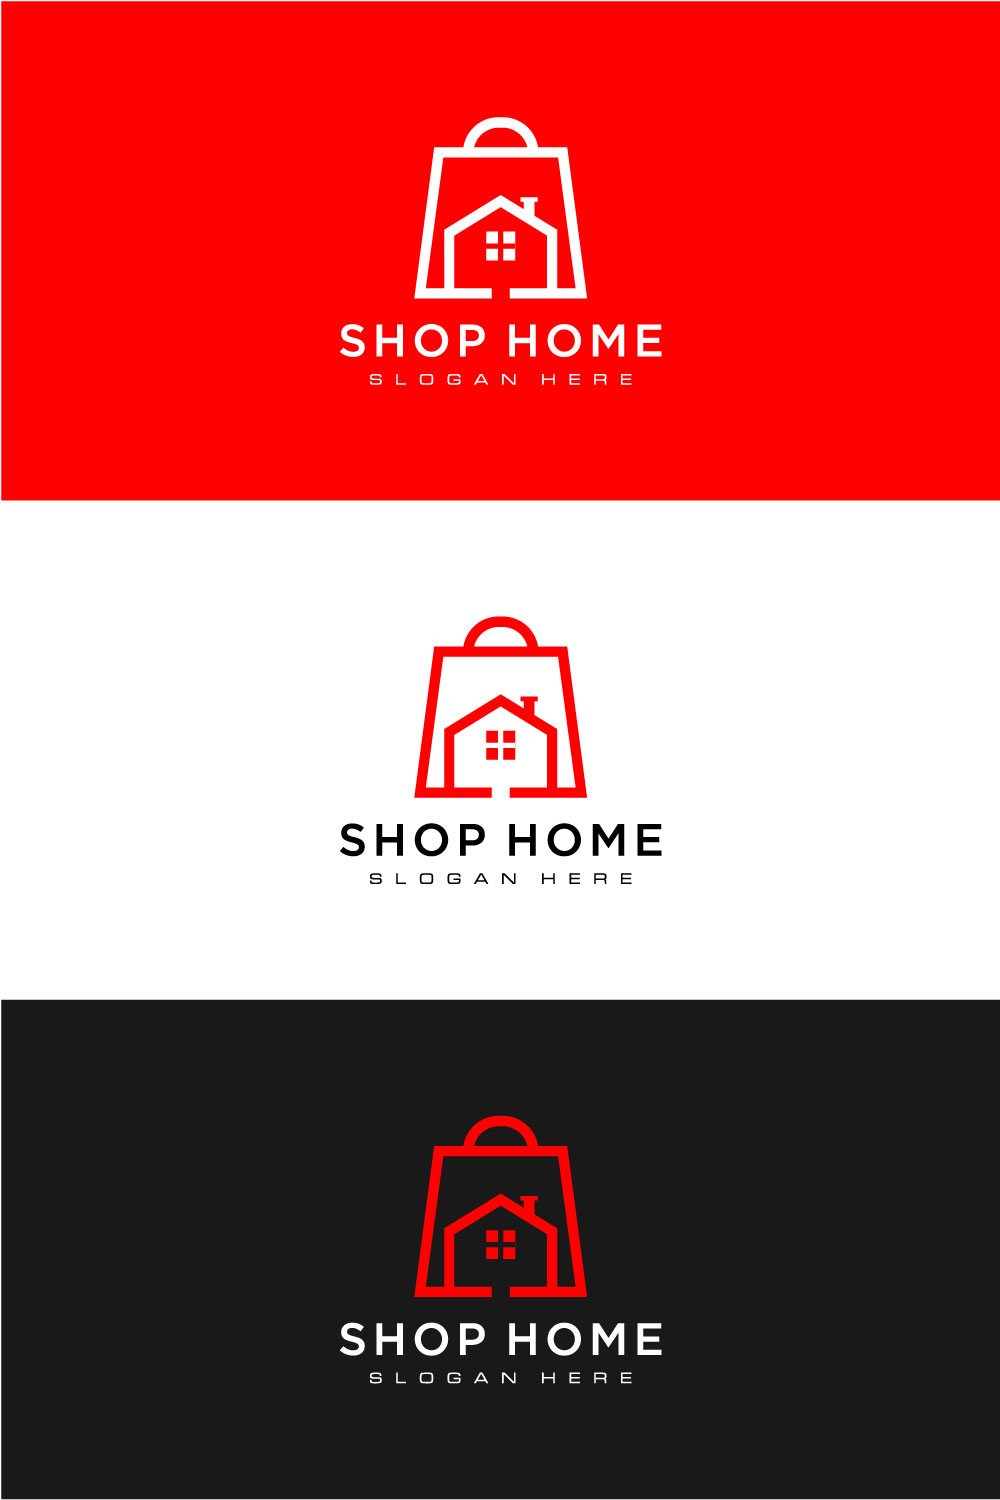 Home Shop Logo Vector Design Pinterest Image.